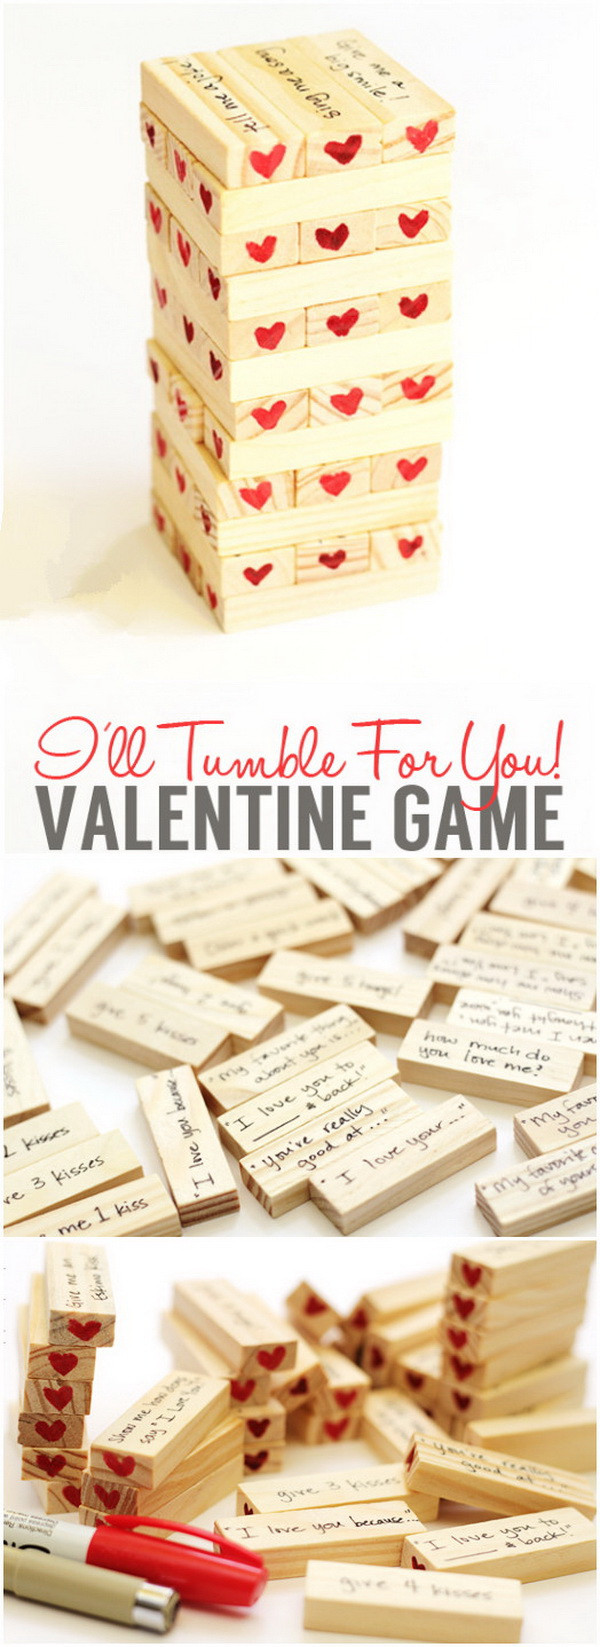 Valentine Gift For Boyfriend Ideas
 Easy DIY Valentine s Day Gifts for Boyfriend Listing More